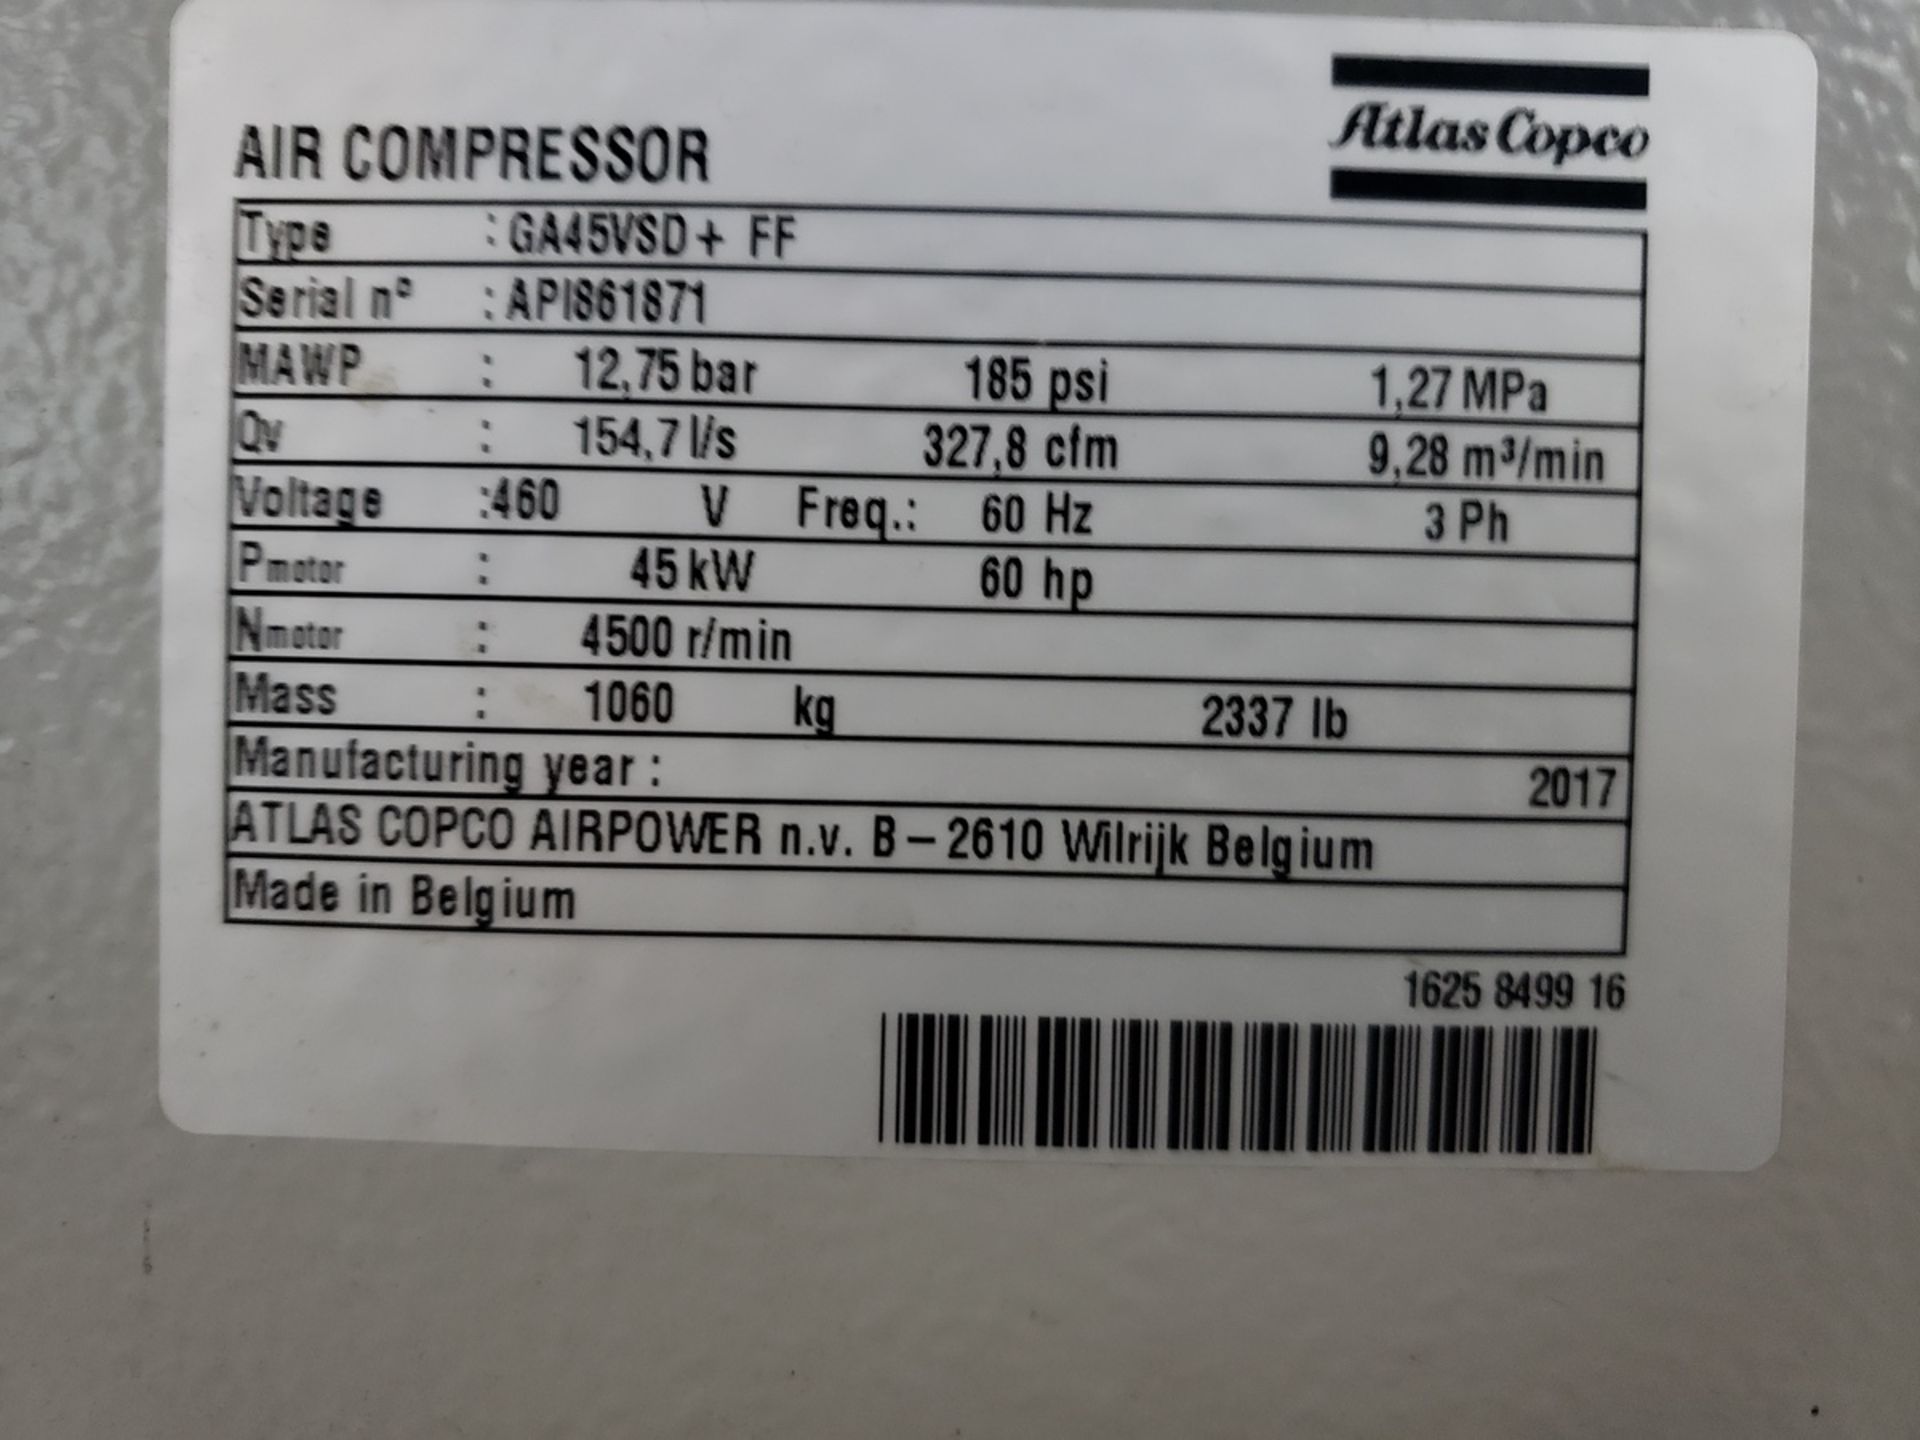 Altlas Copco 60 HP Rotary Screw Air Compressor, M# GA45VSD+FF, S/N API861871 | Rig Fee $750 - Image 2 of 3